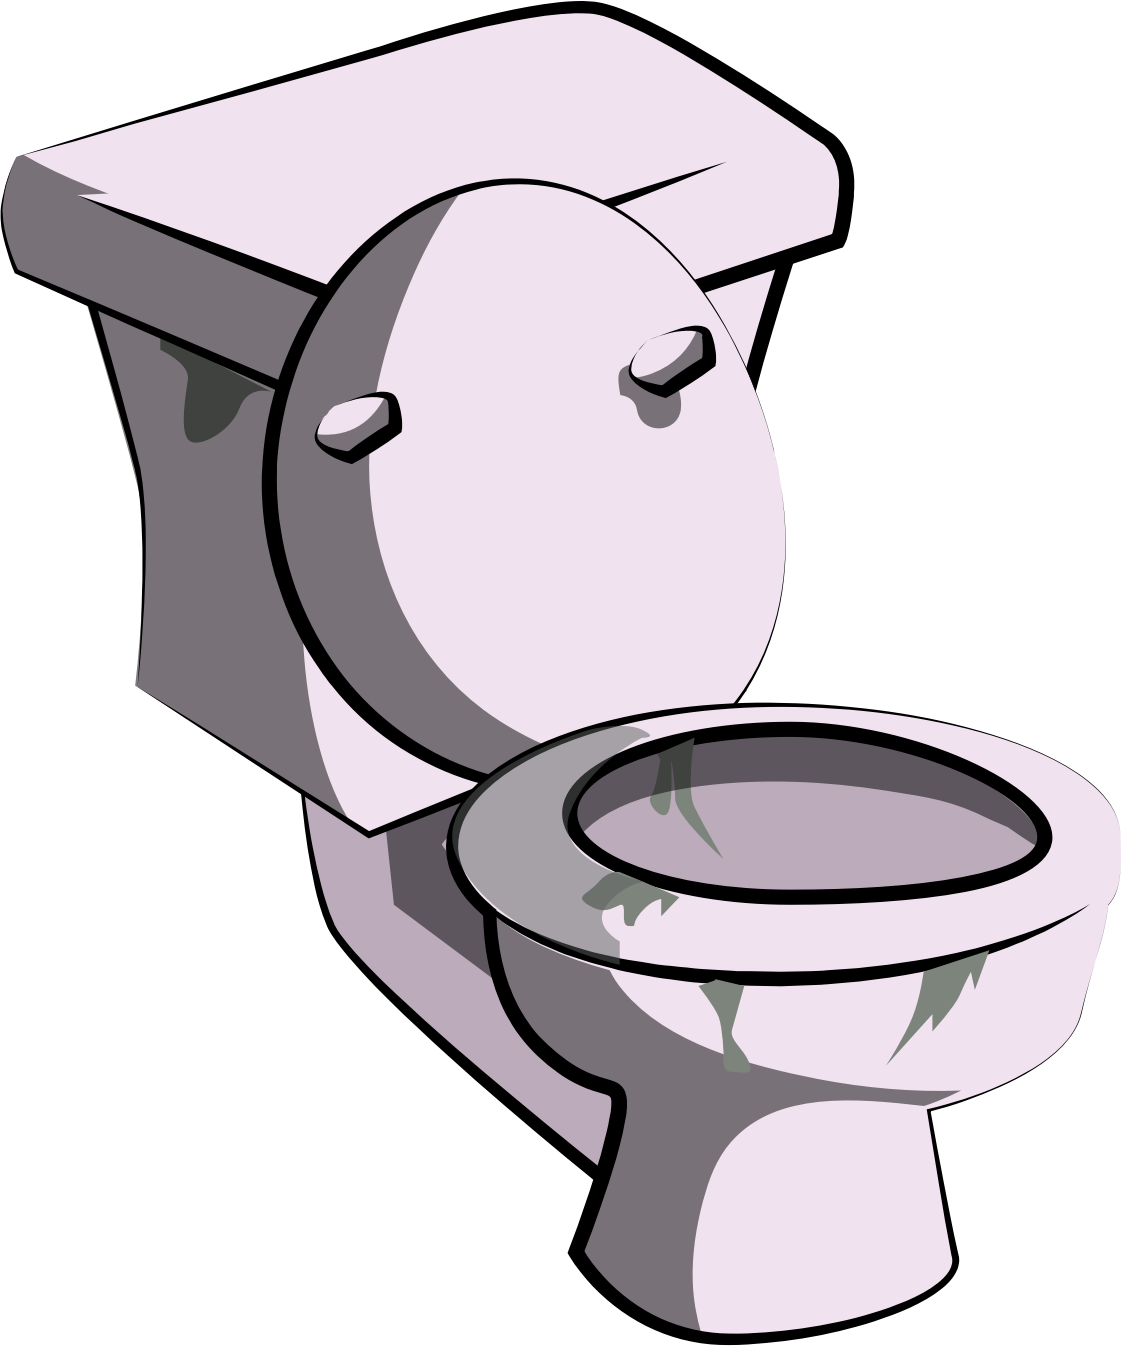 Toilet Cartoon Images - Toilet Clip Clipart Cartoon Bathroom Flush Seat ...